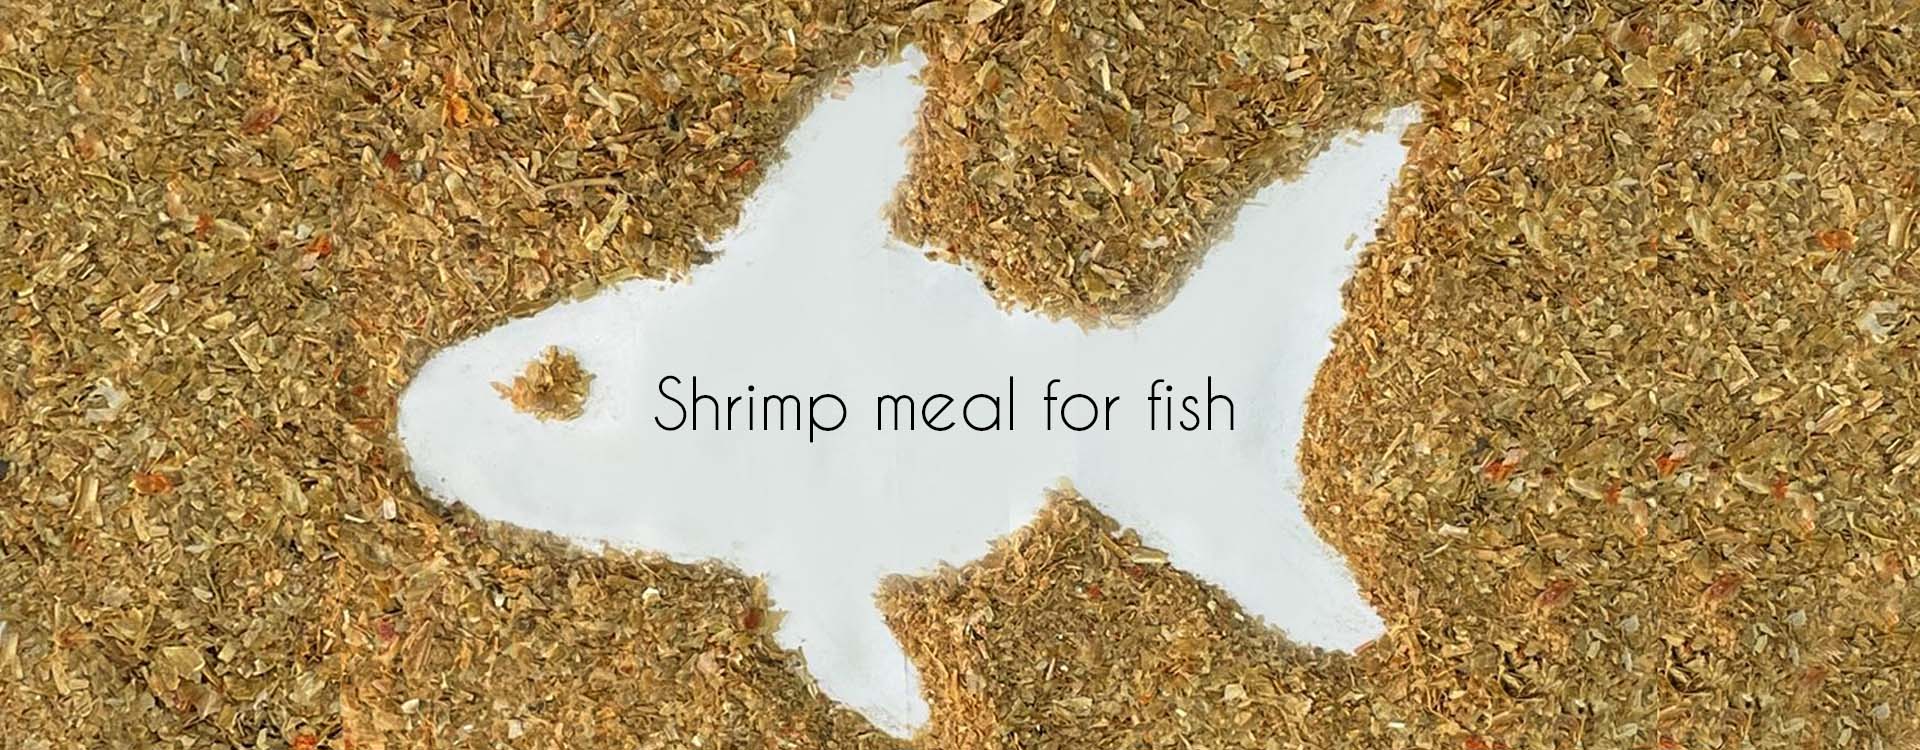 Fish Feed Shrimp Meal